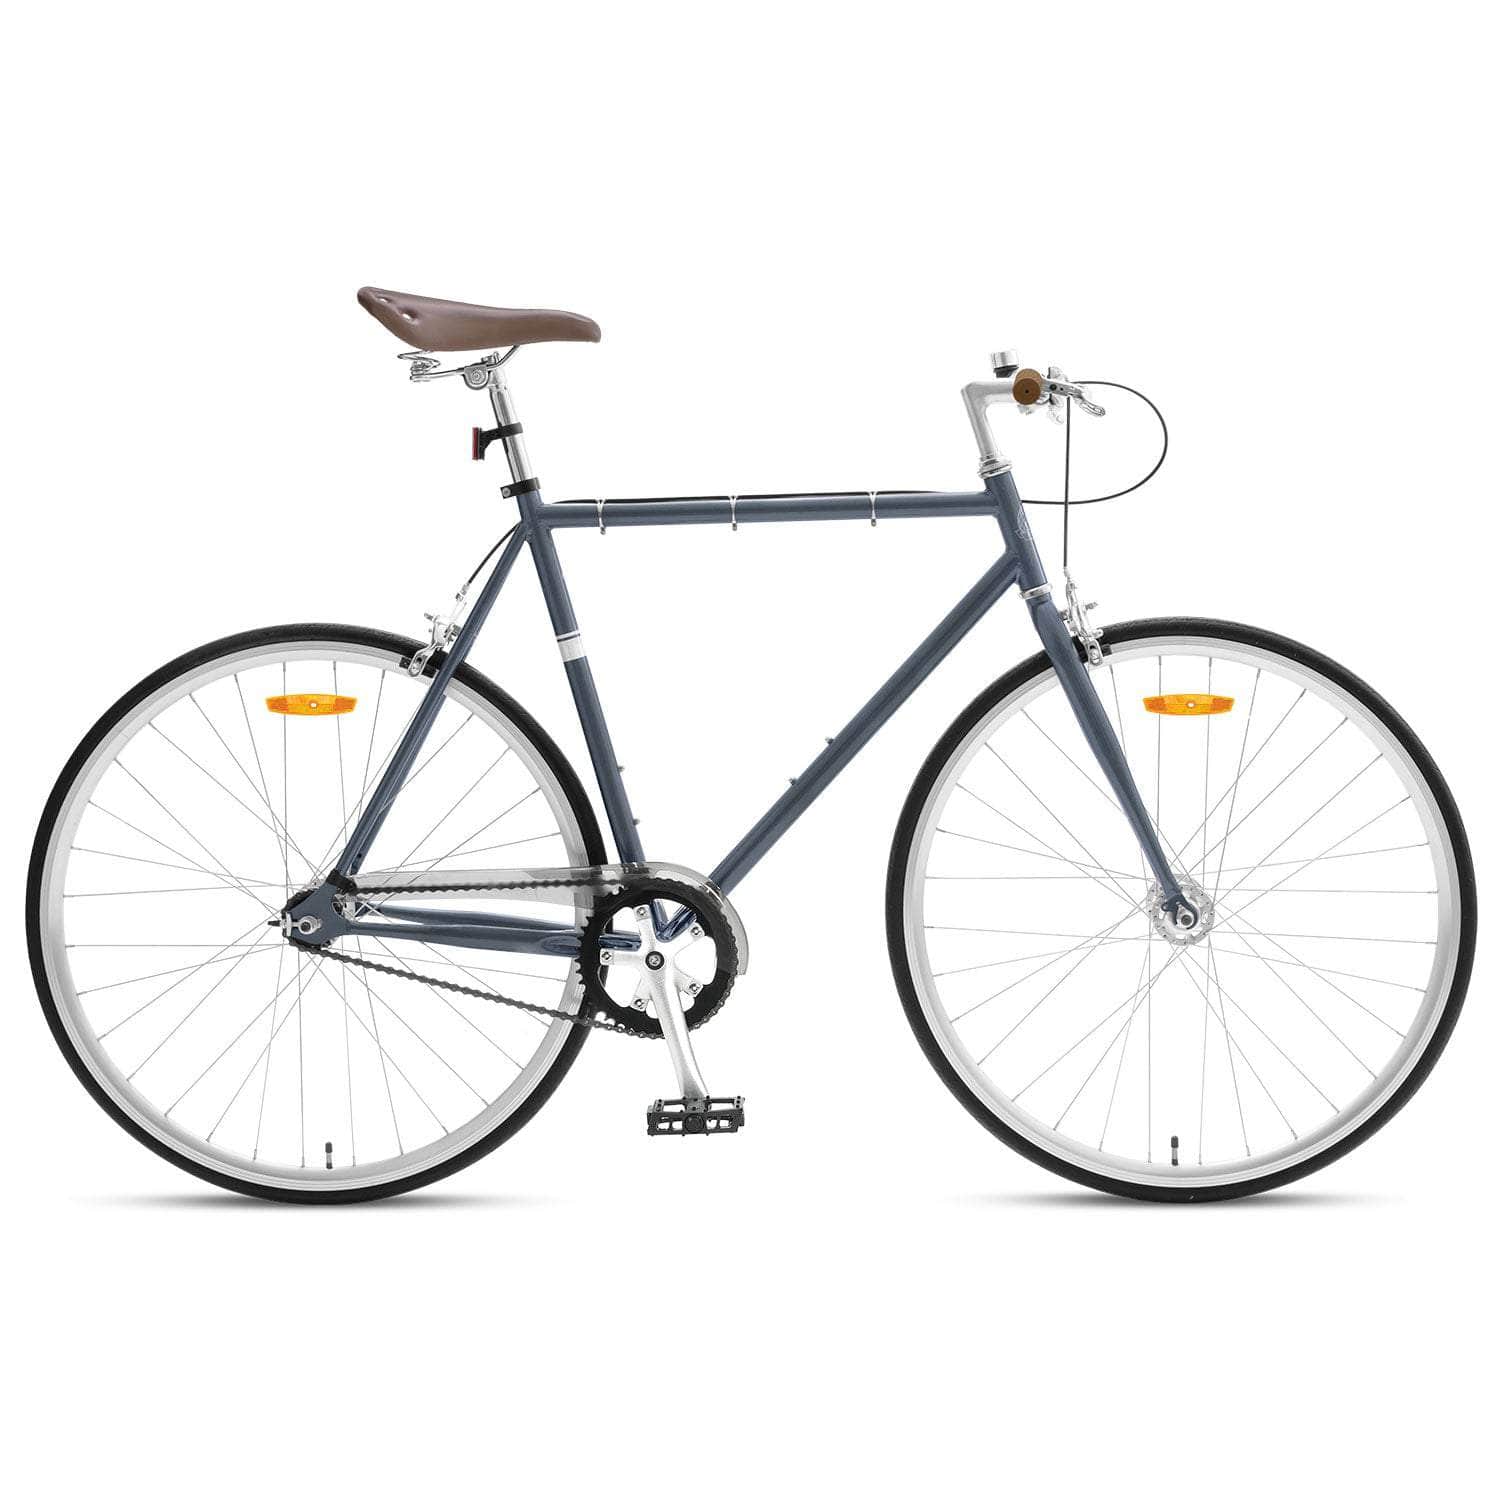 Pearl Black Fixie: Sleek 53cm Bikes for Stylish Rides